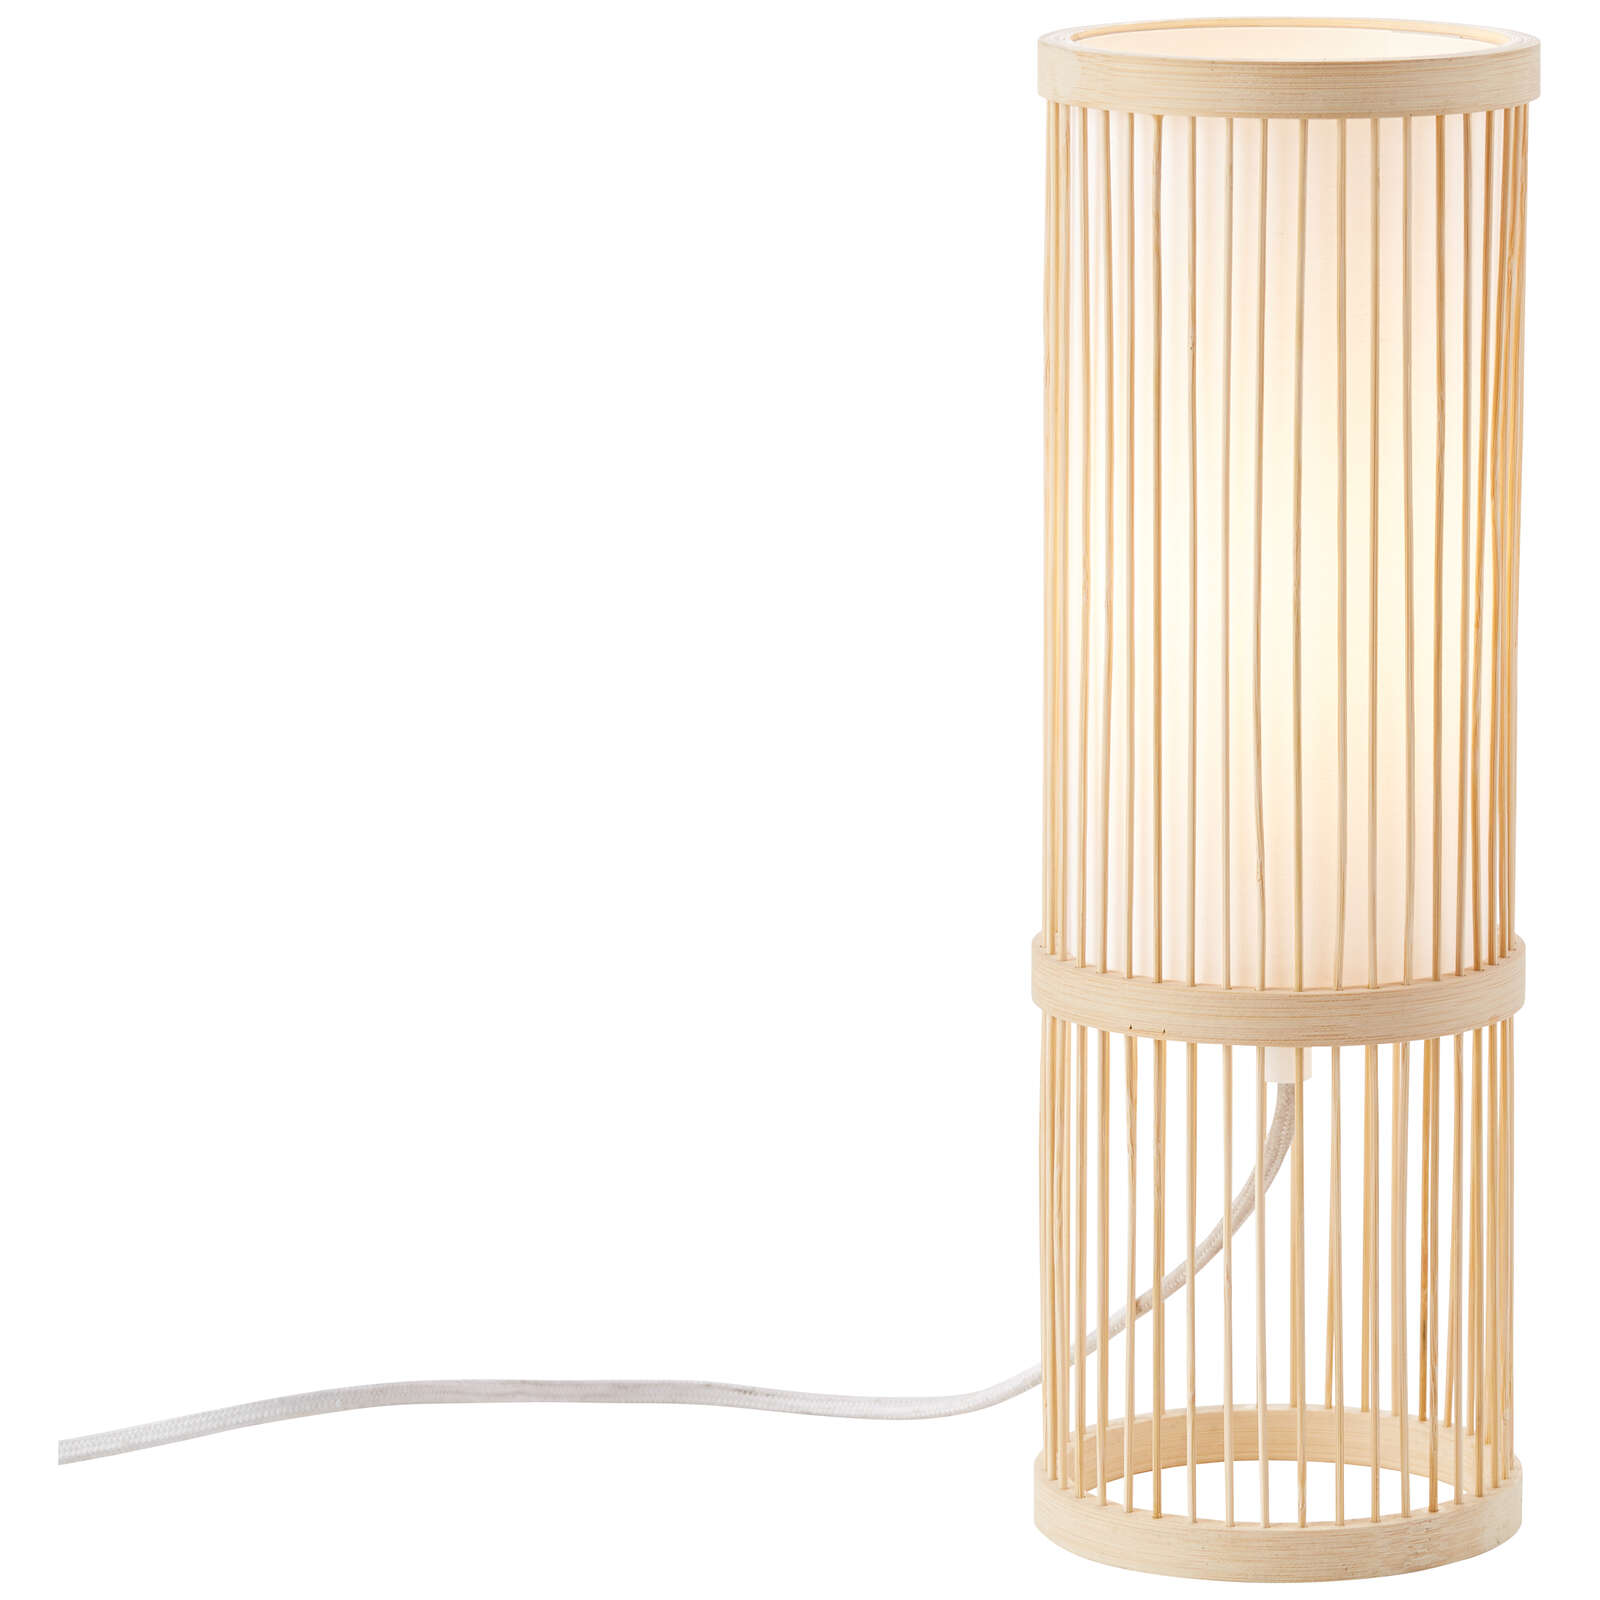             Lampe de table en bambou - Luise 2 - Marron
        